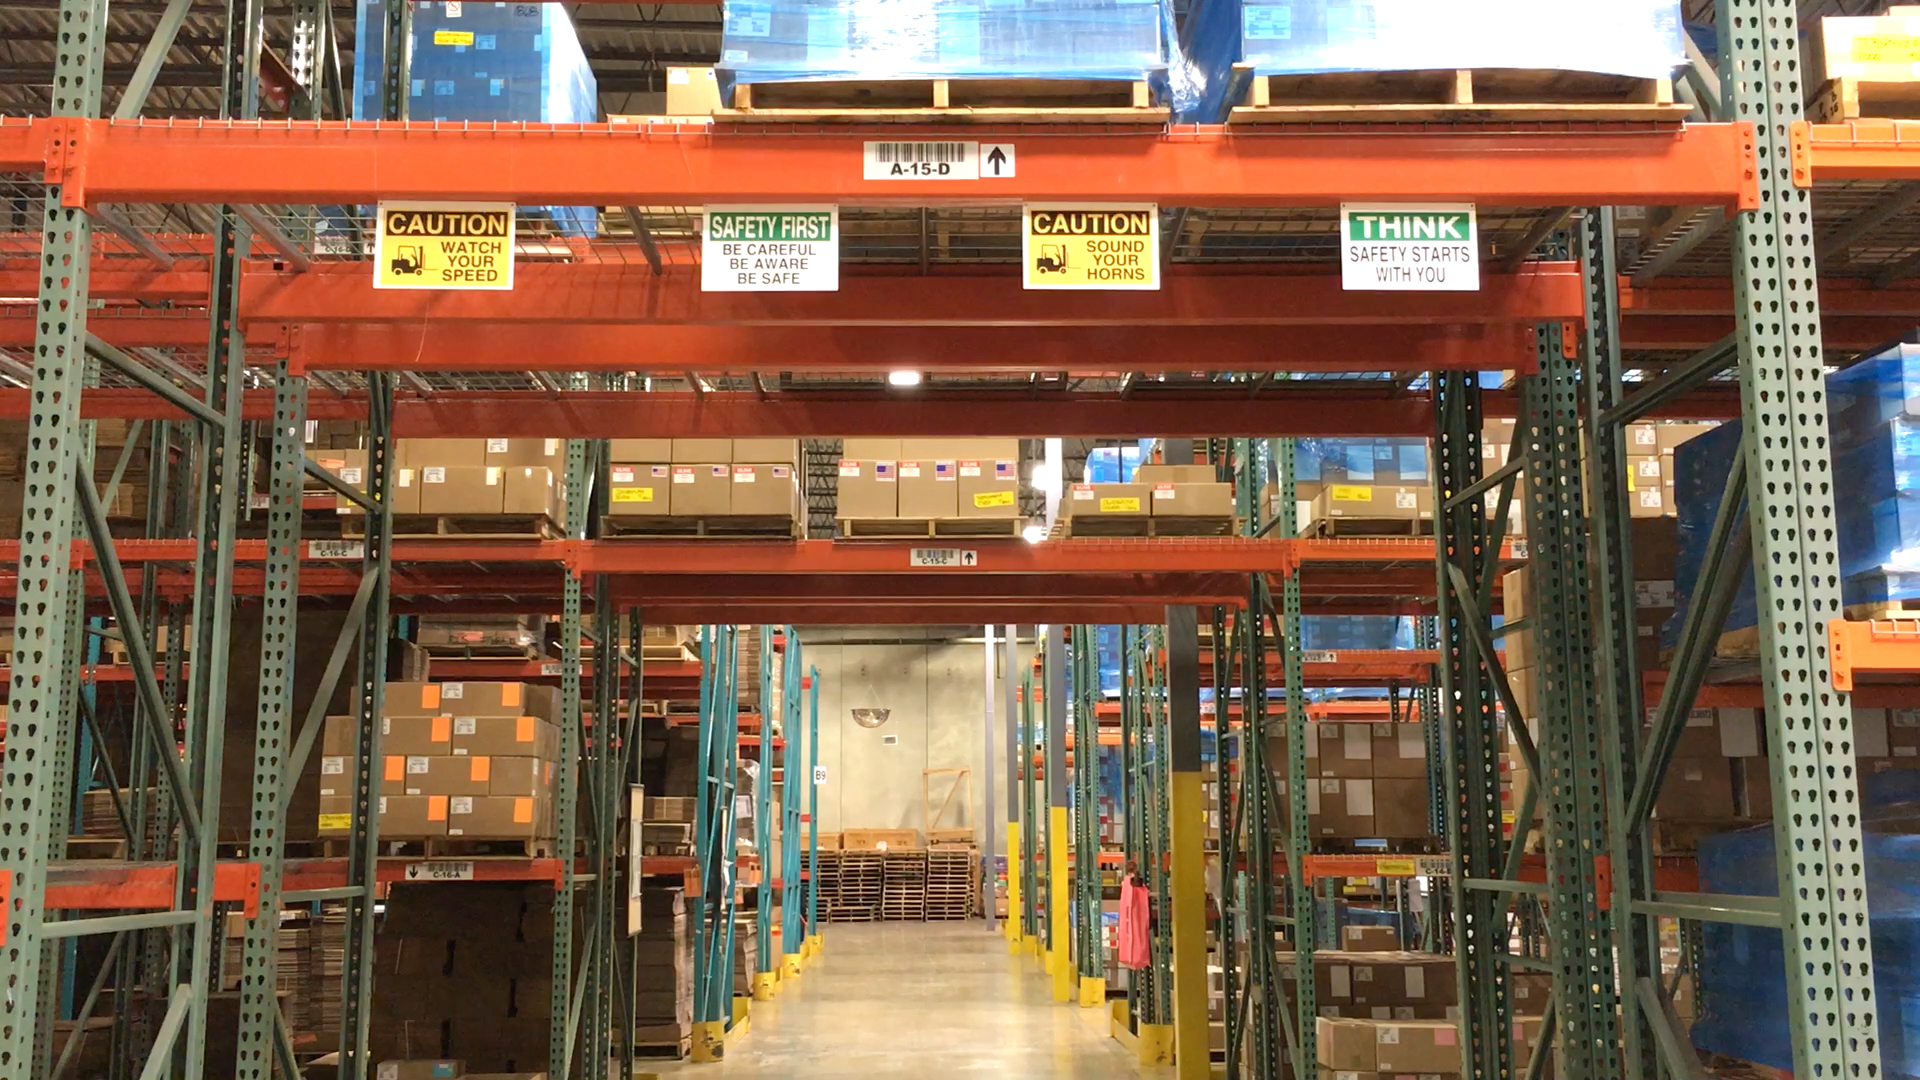 Long aisle of racks in a warehouse